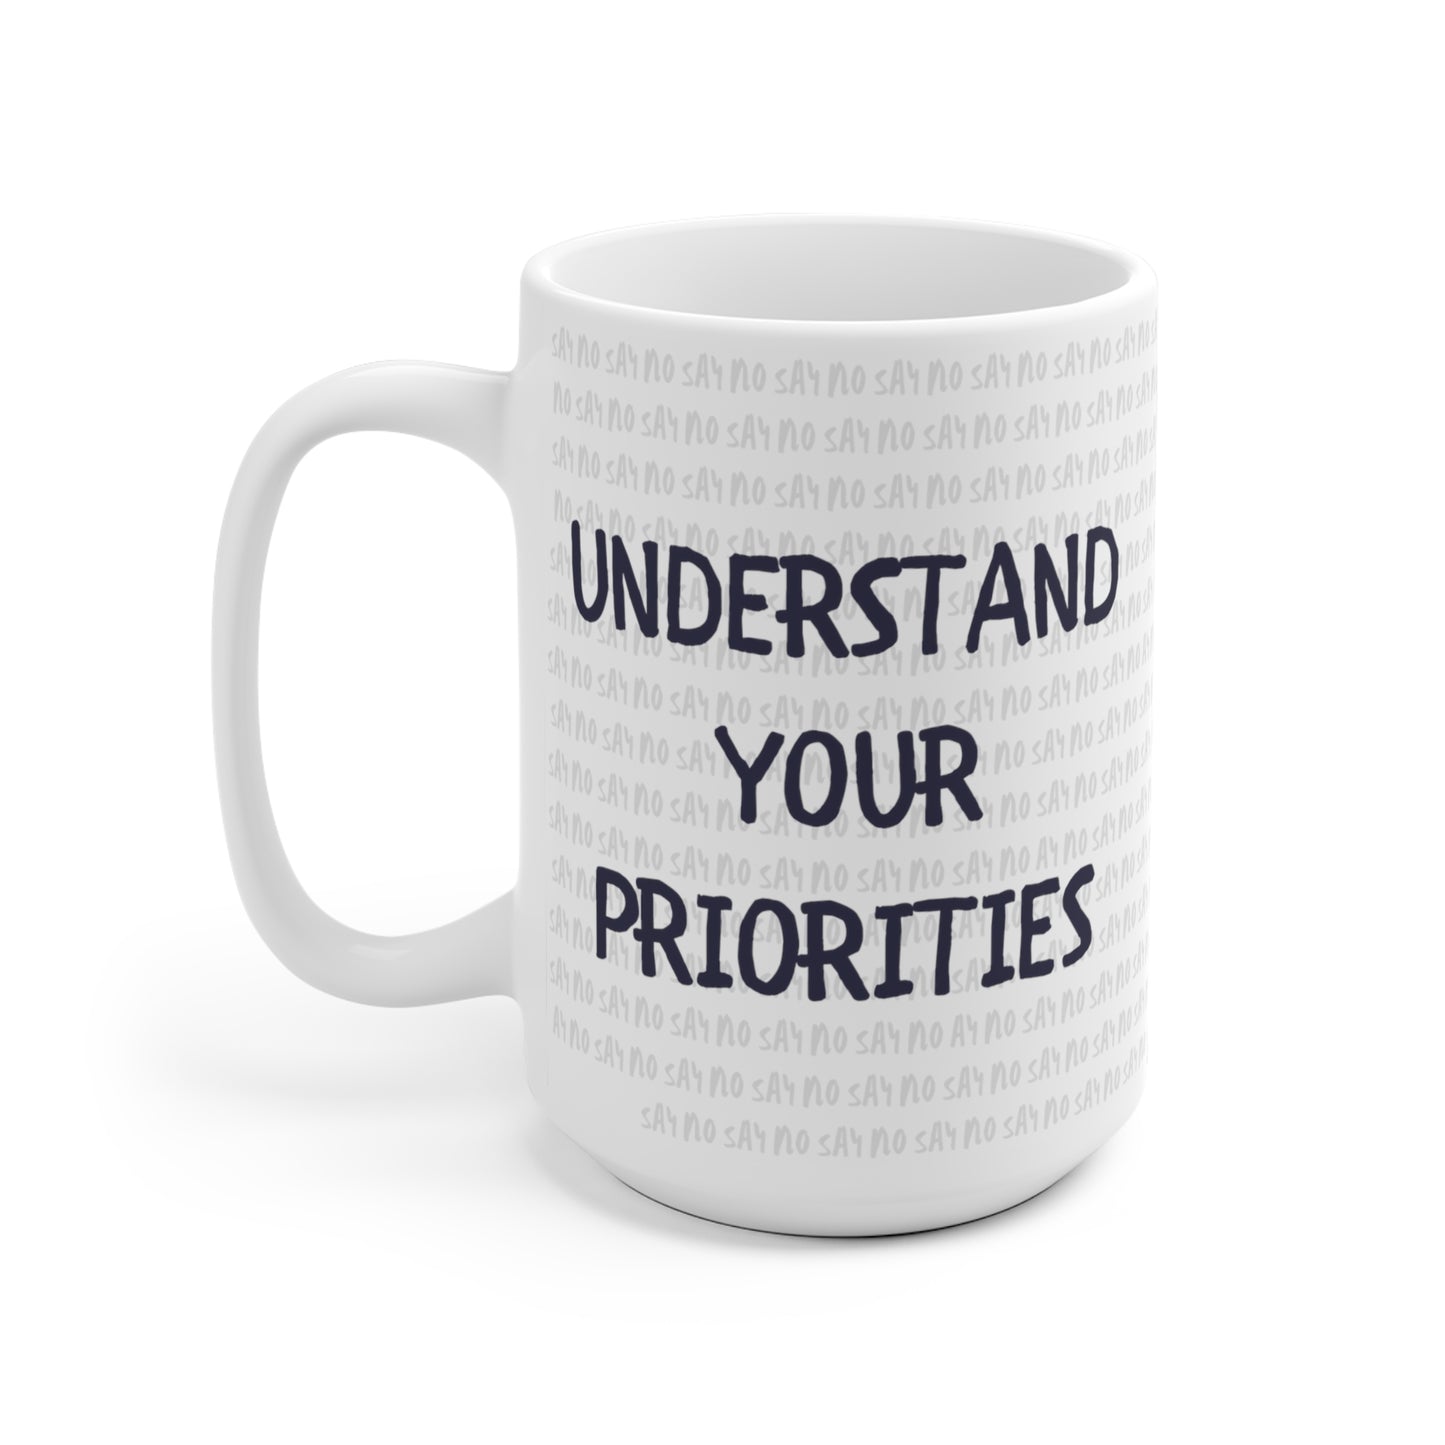 Saying NO | Priorities | 15oz White Mug